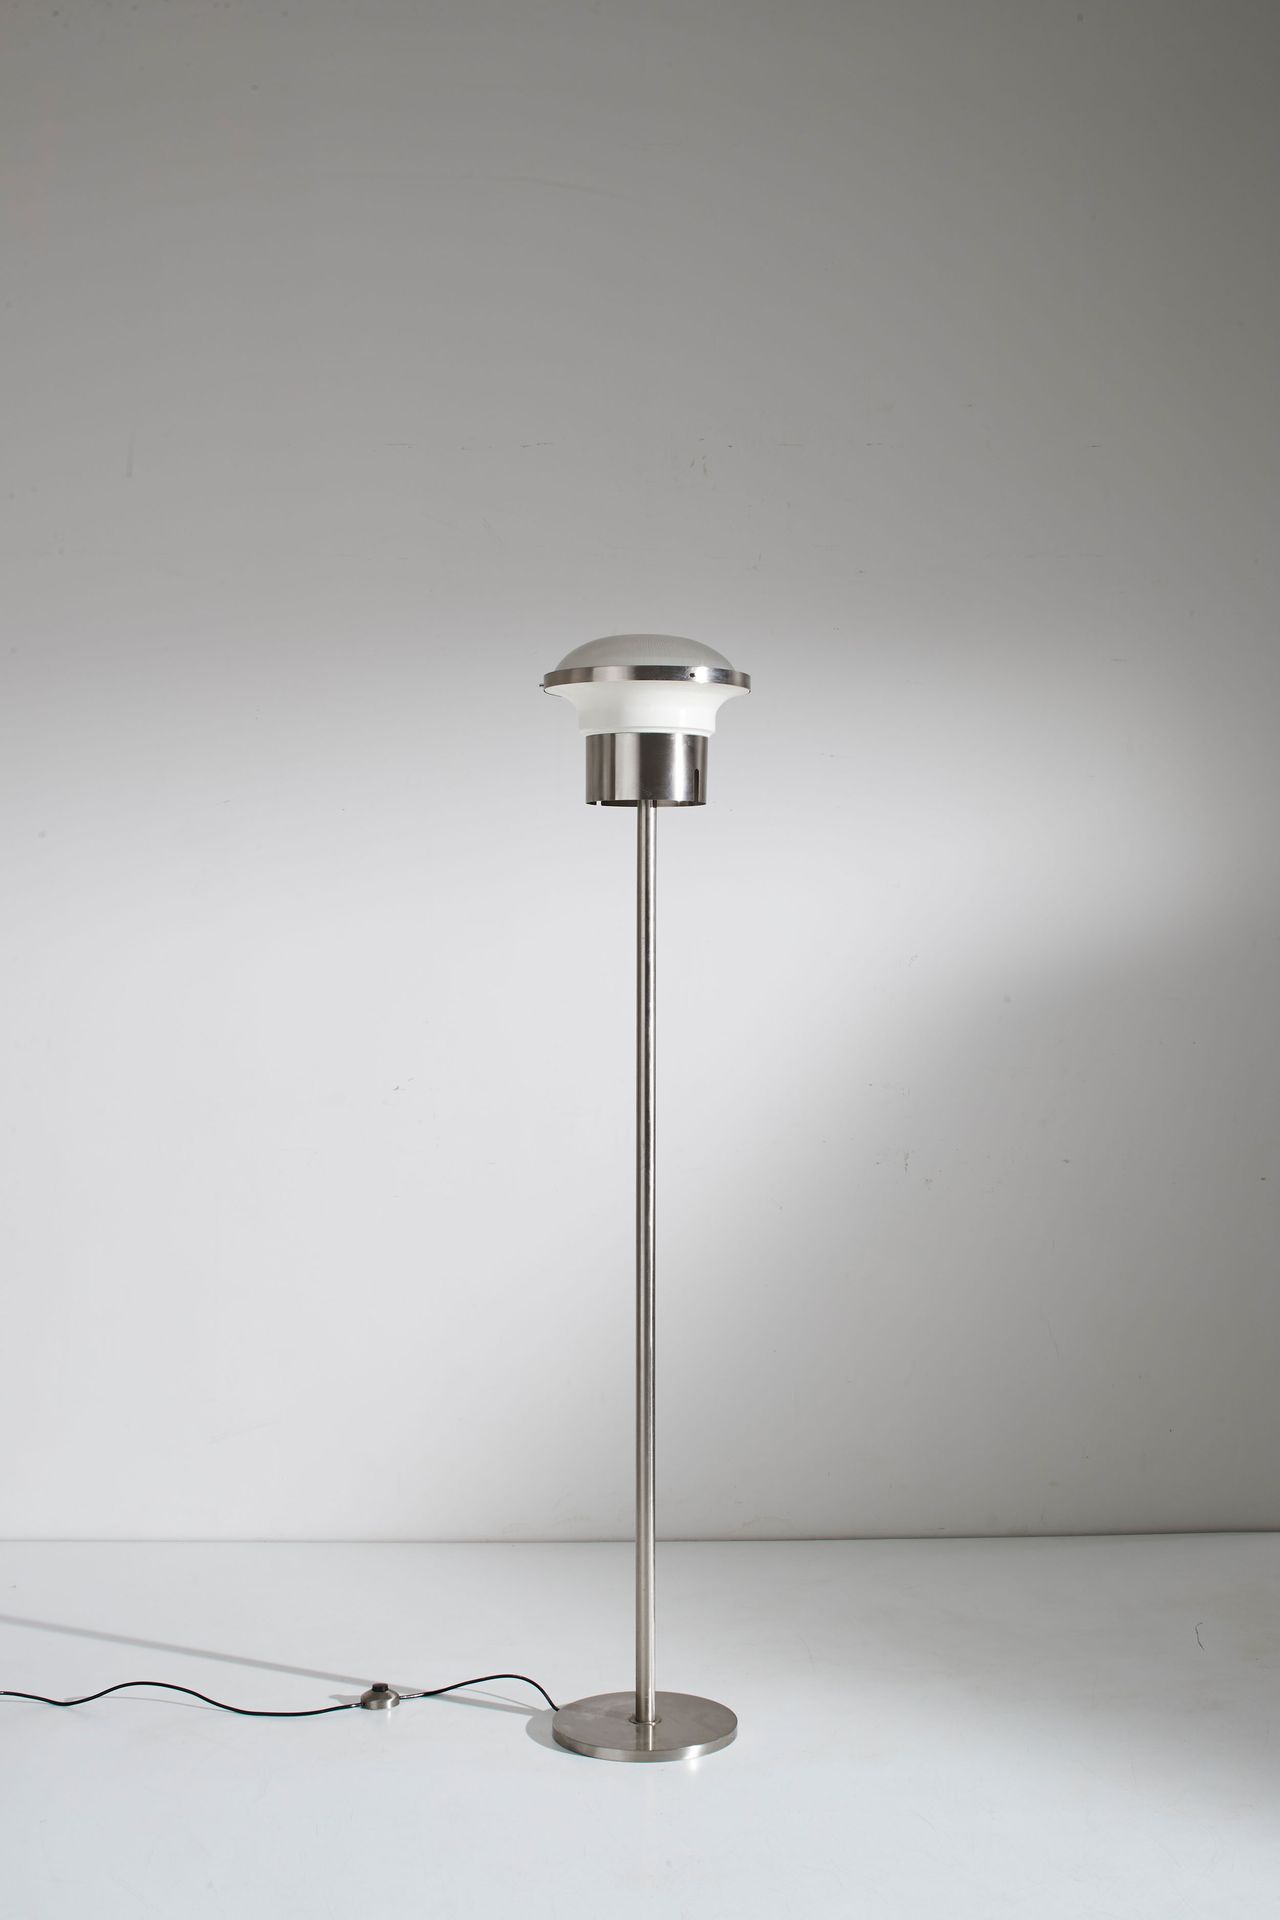 SERGIO MAZZA 落地灯。铸铁，镀镍金属，涂铝，压制玻璃。生产Artemide 1960年代。
cm 170x35
A FLOOR LAMP BY S.&hellip;